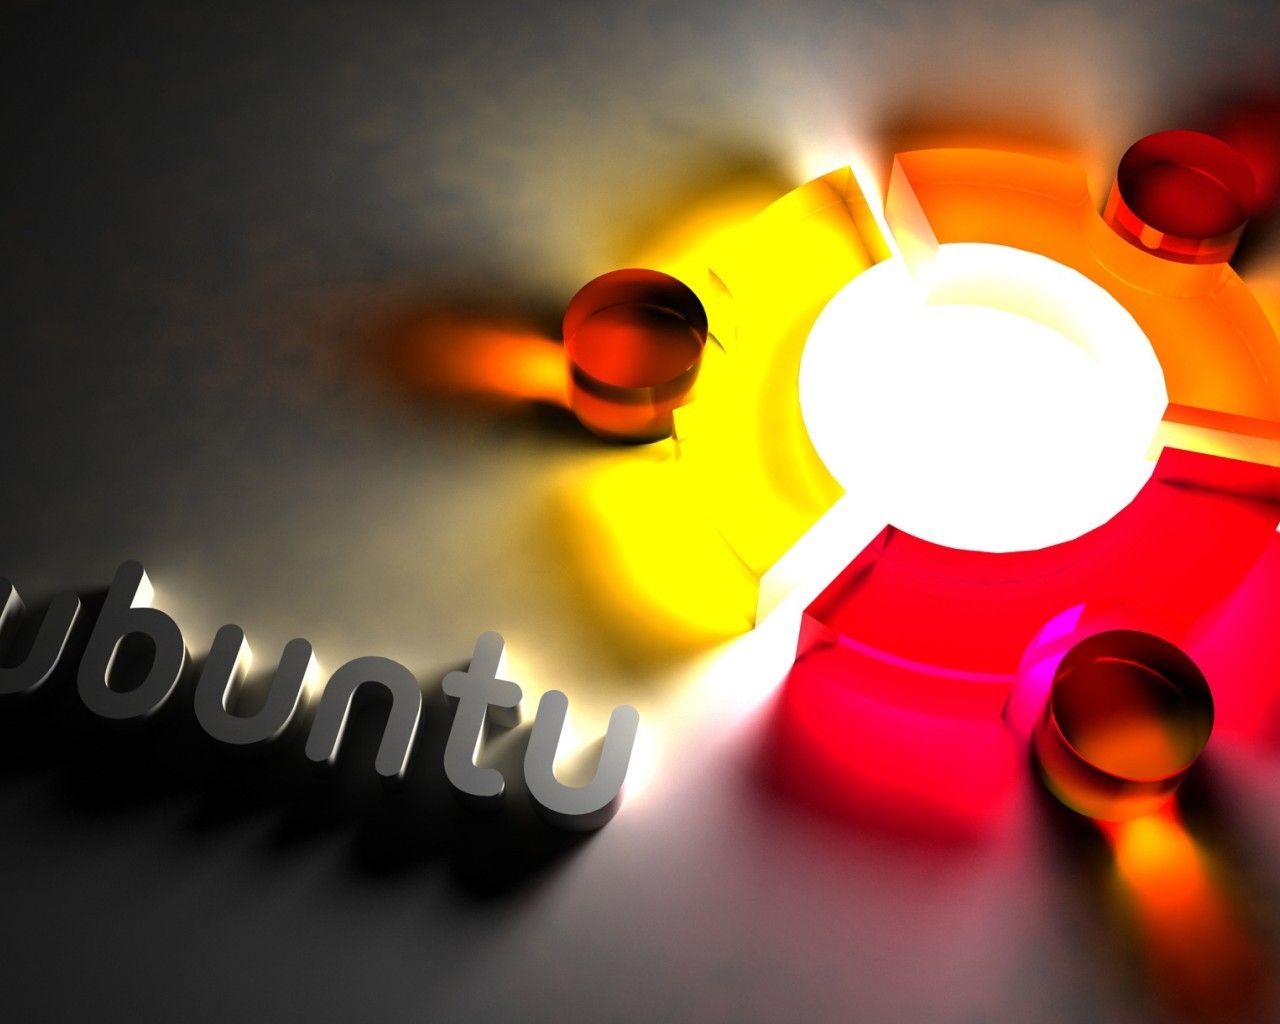 Ubuntu Cool Logo for 1280 x 1024 resolution